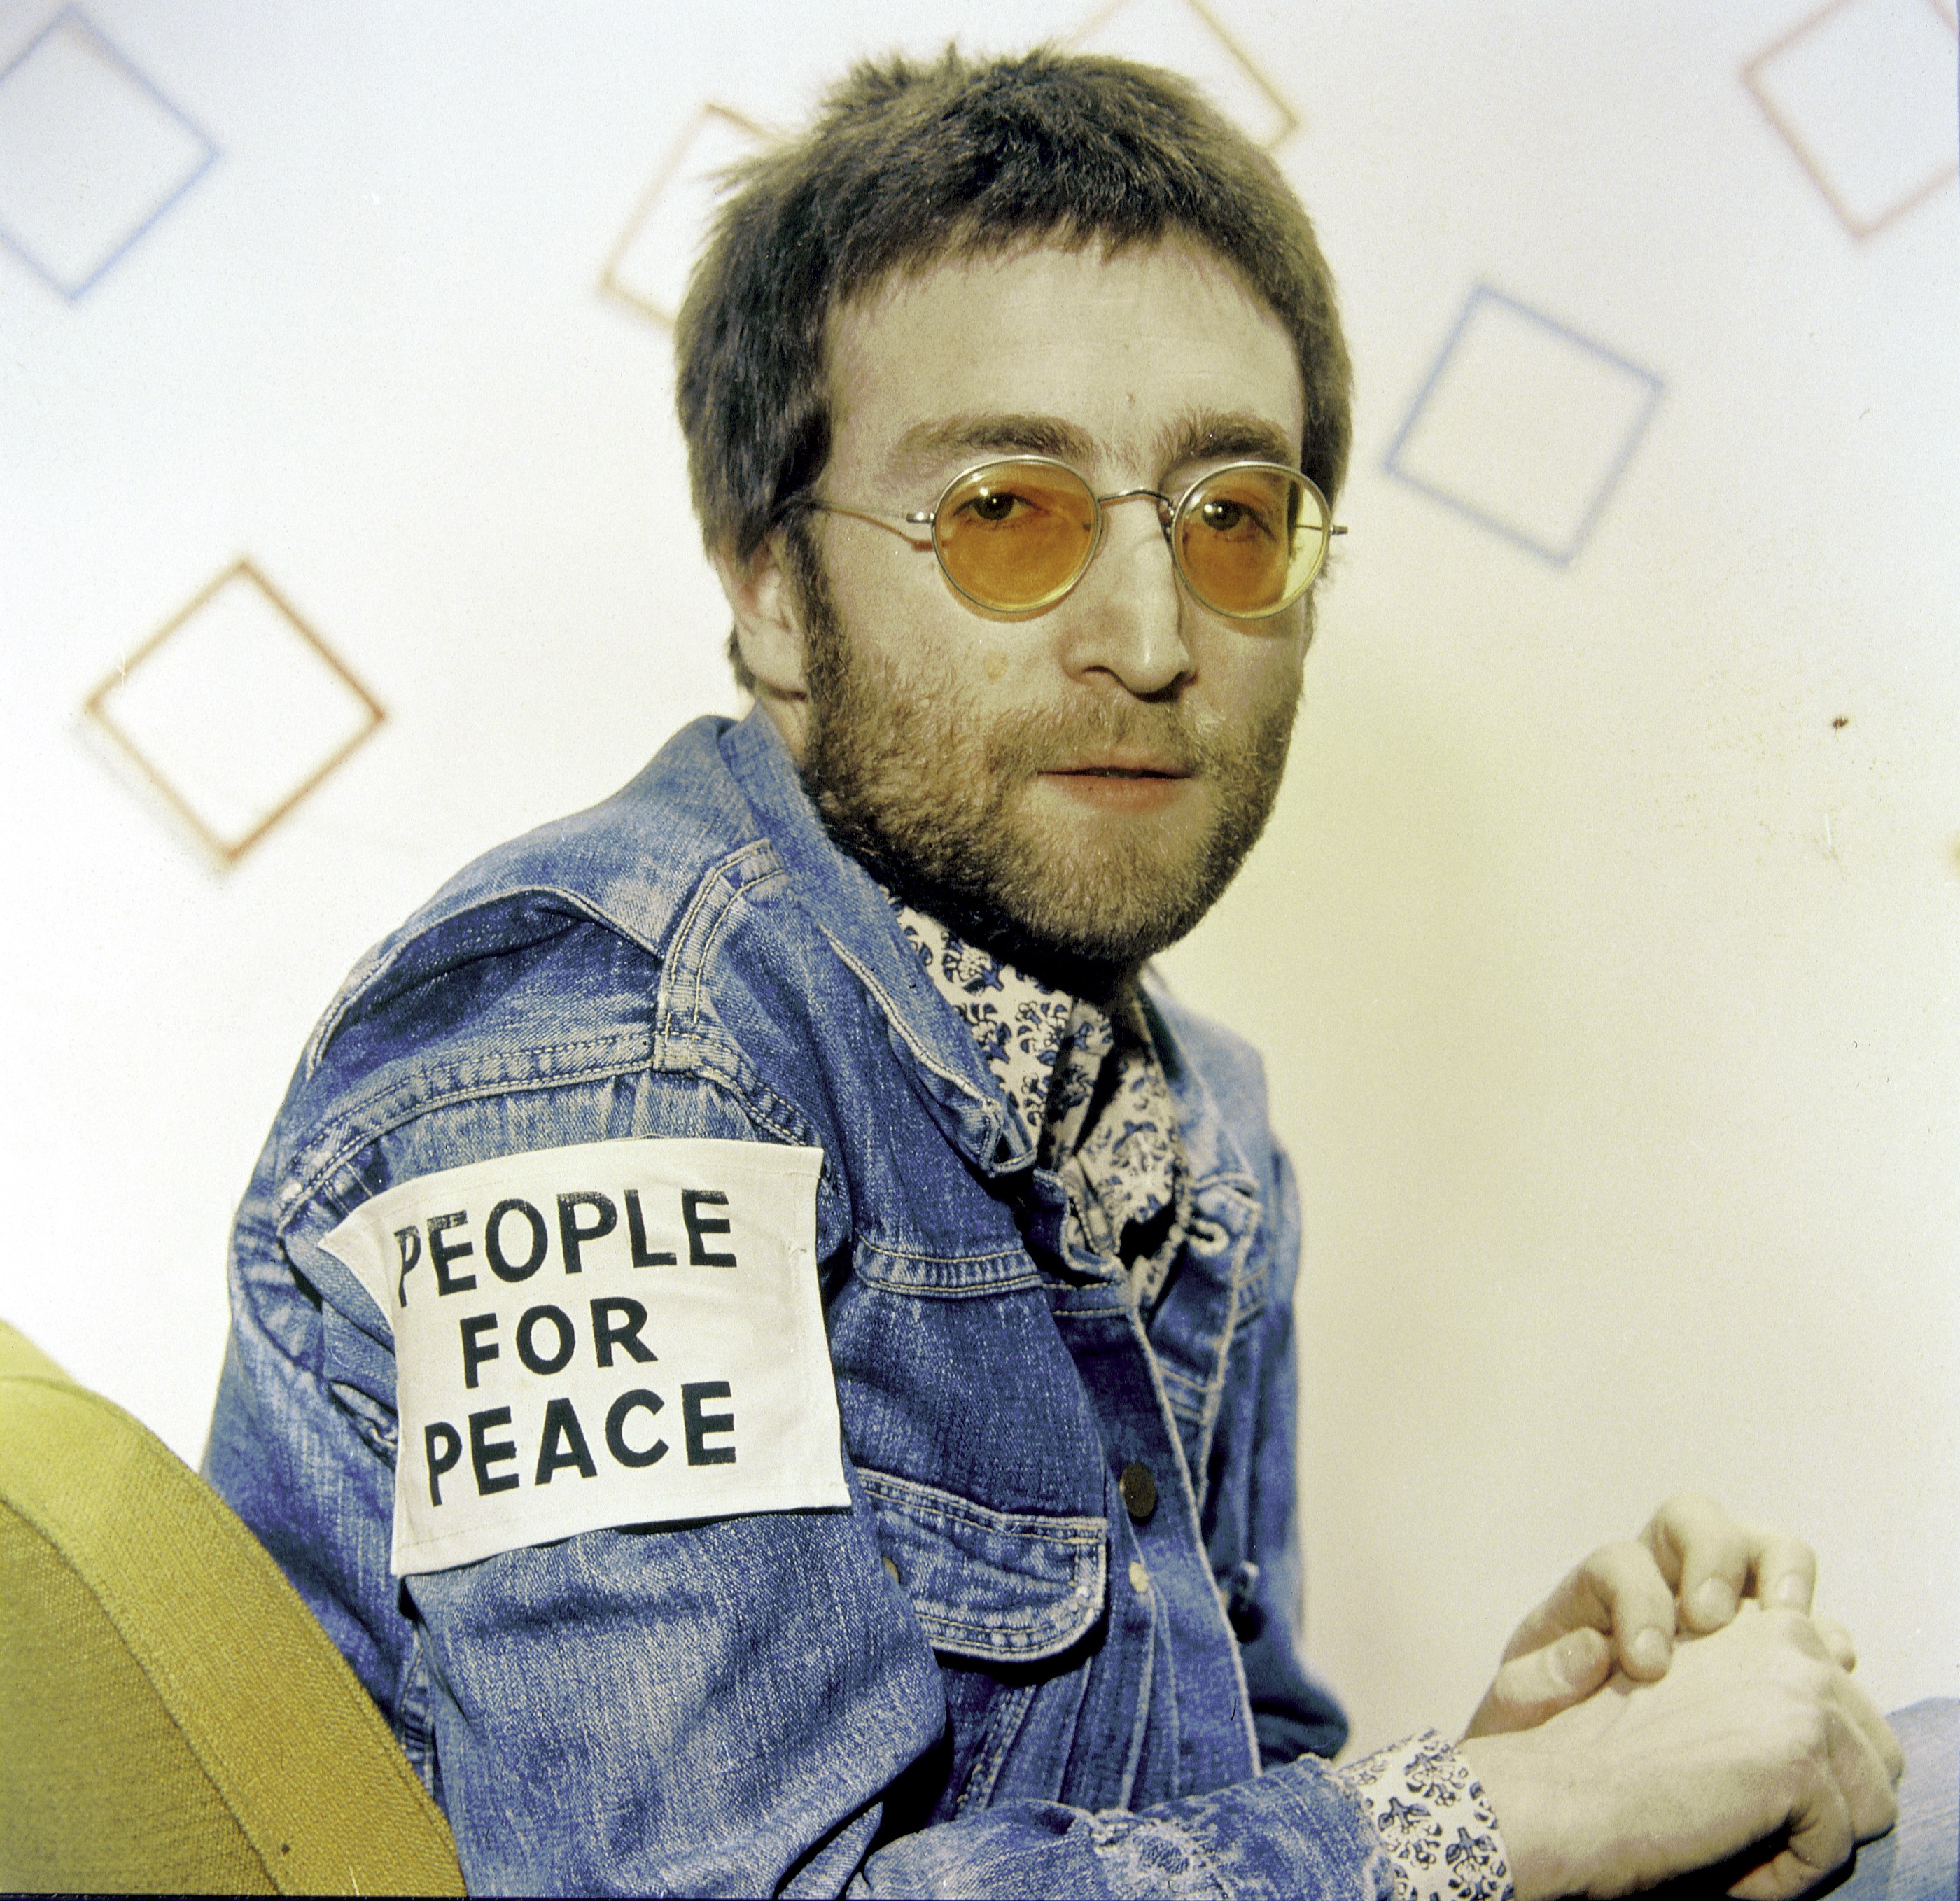 The Beatles' John Lennon wearing yellow glasses